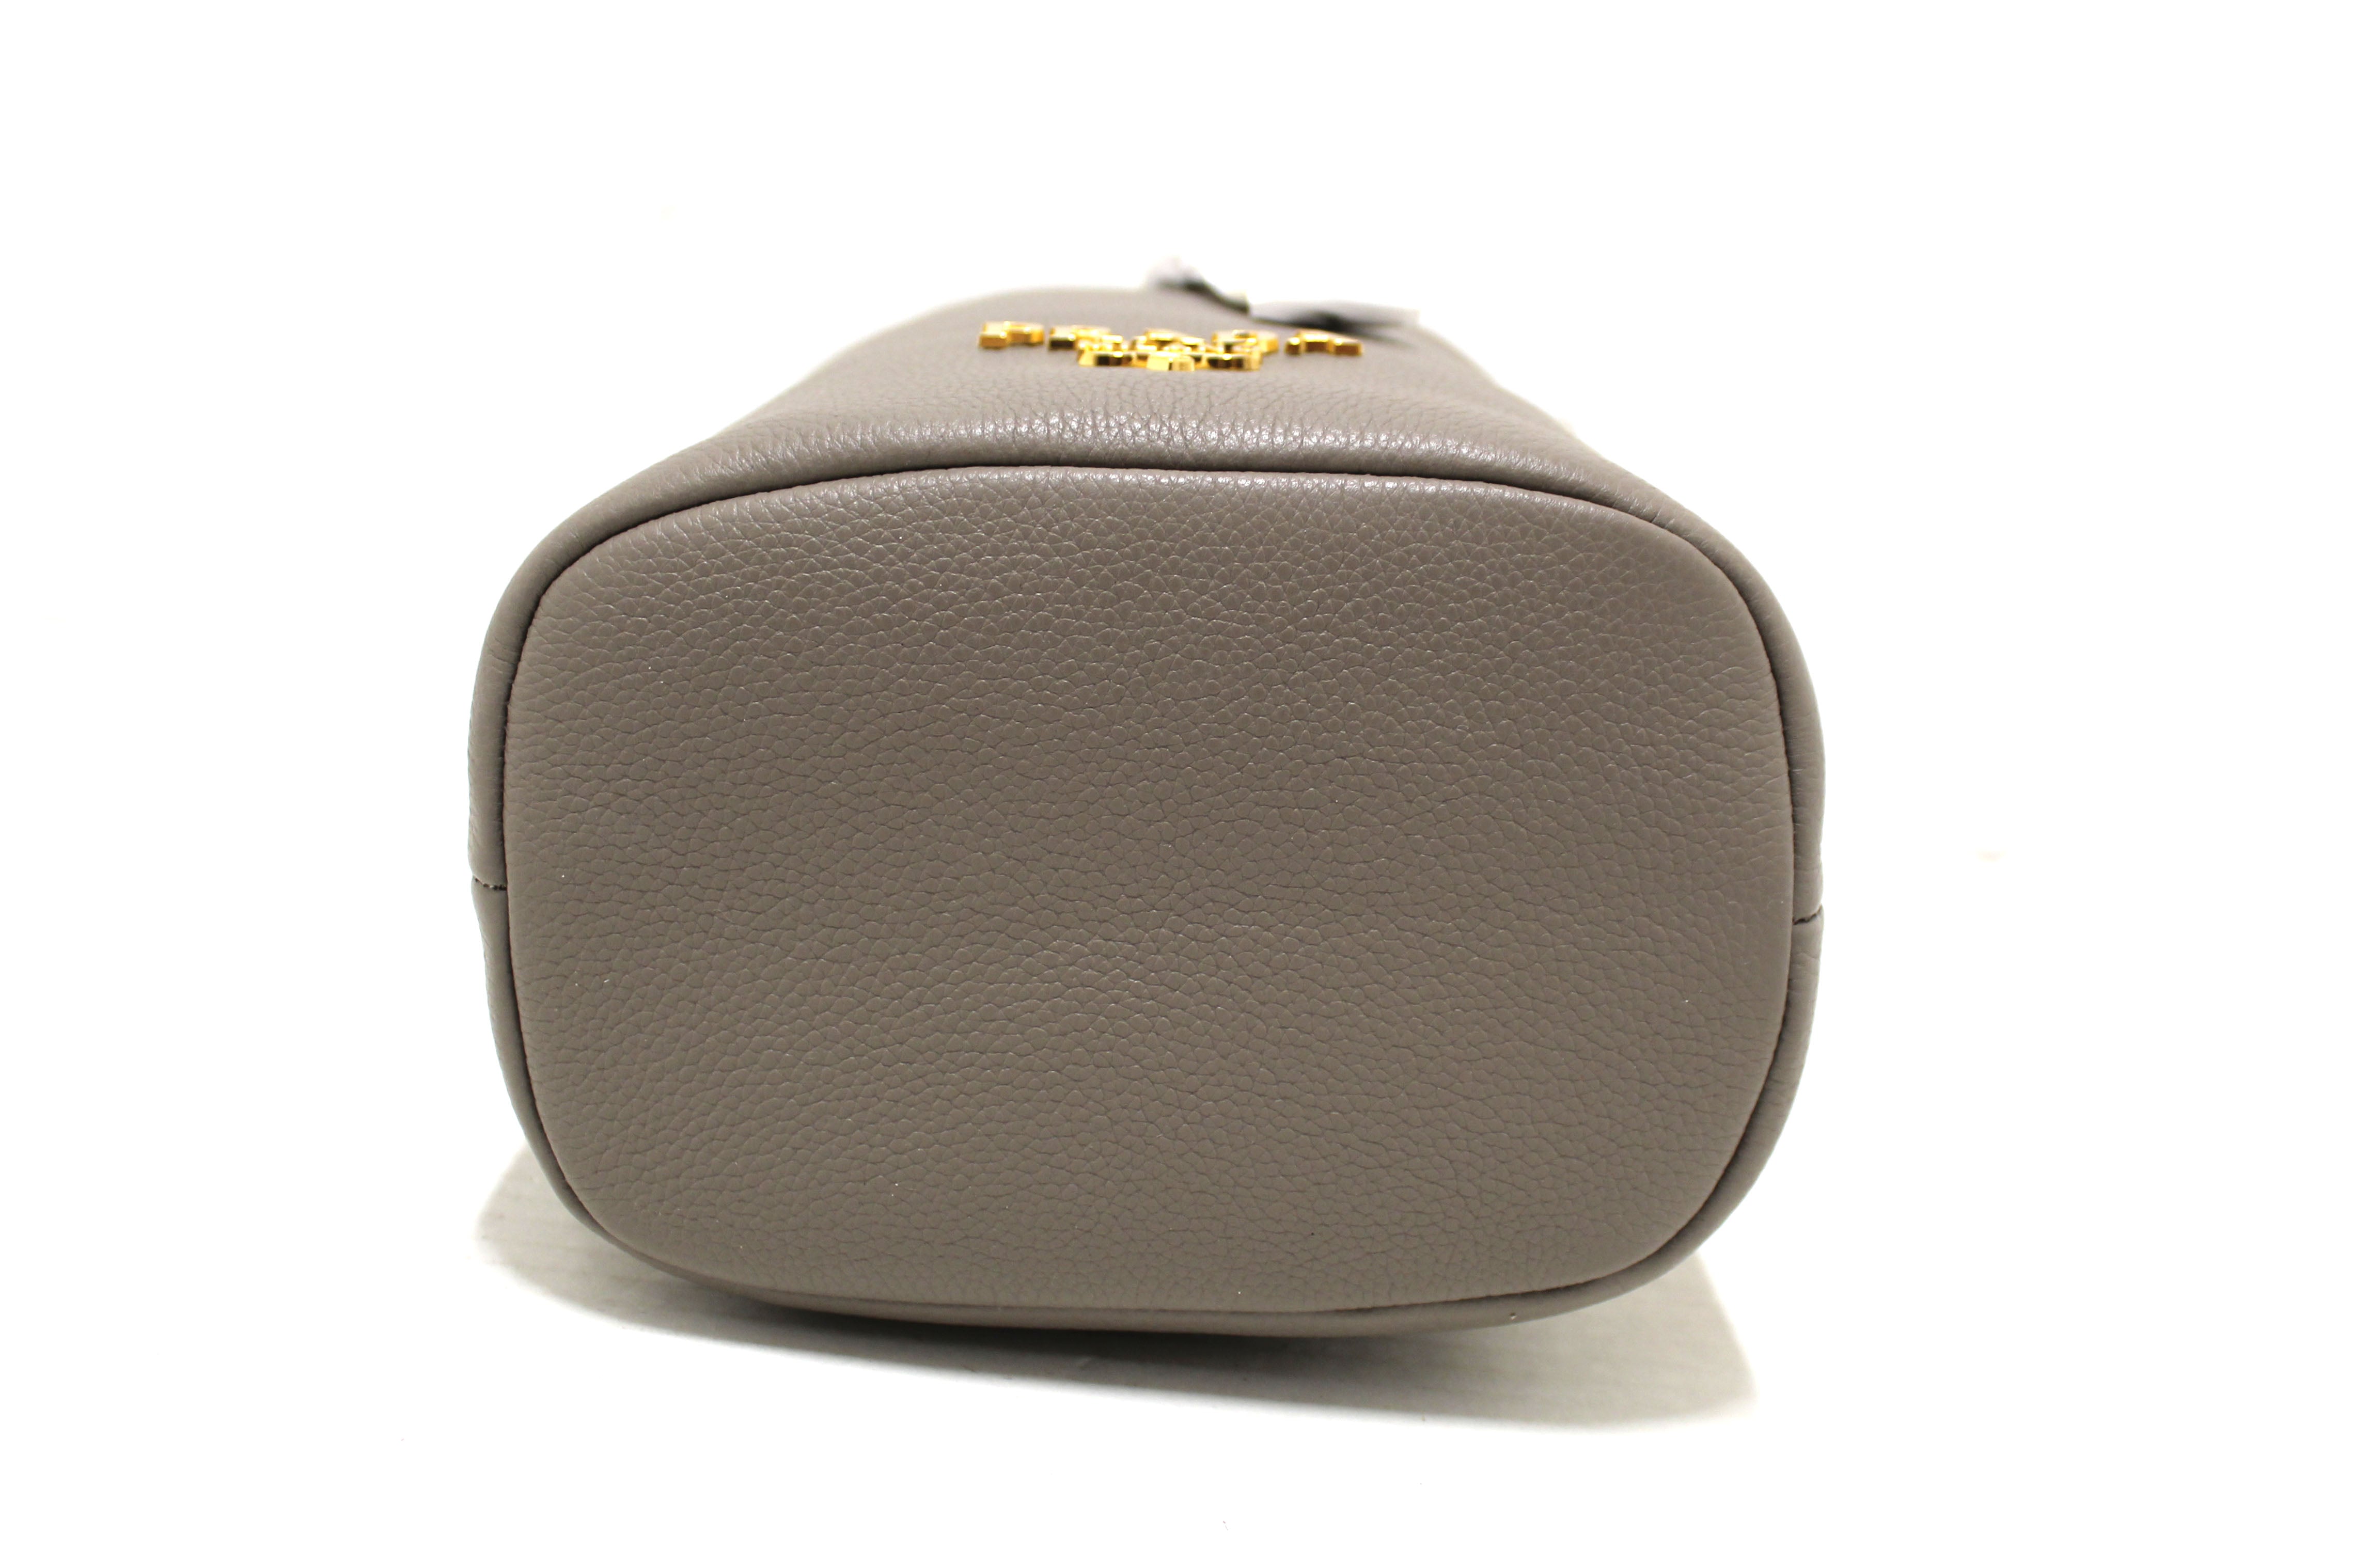 NEW Authentic Prada Grey Calf Leather Drawstring Bucket Messenger Bag